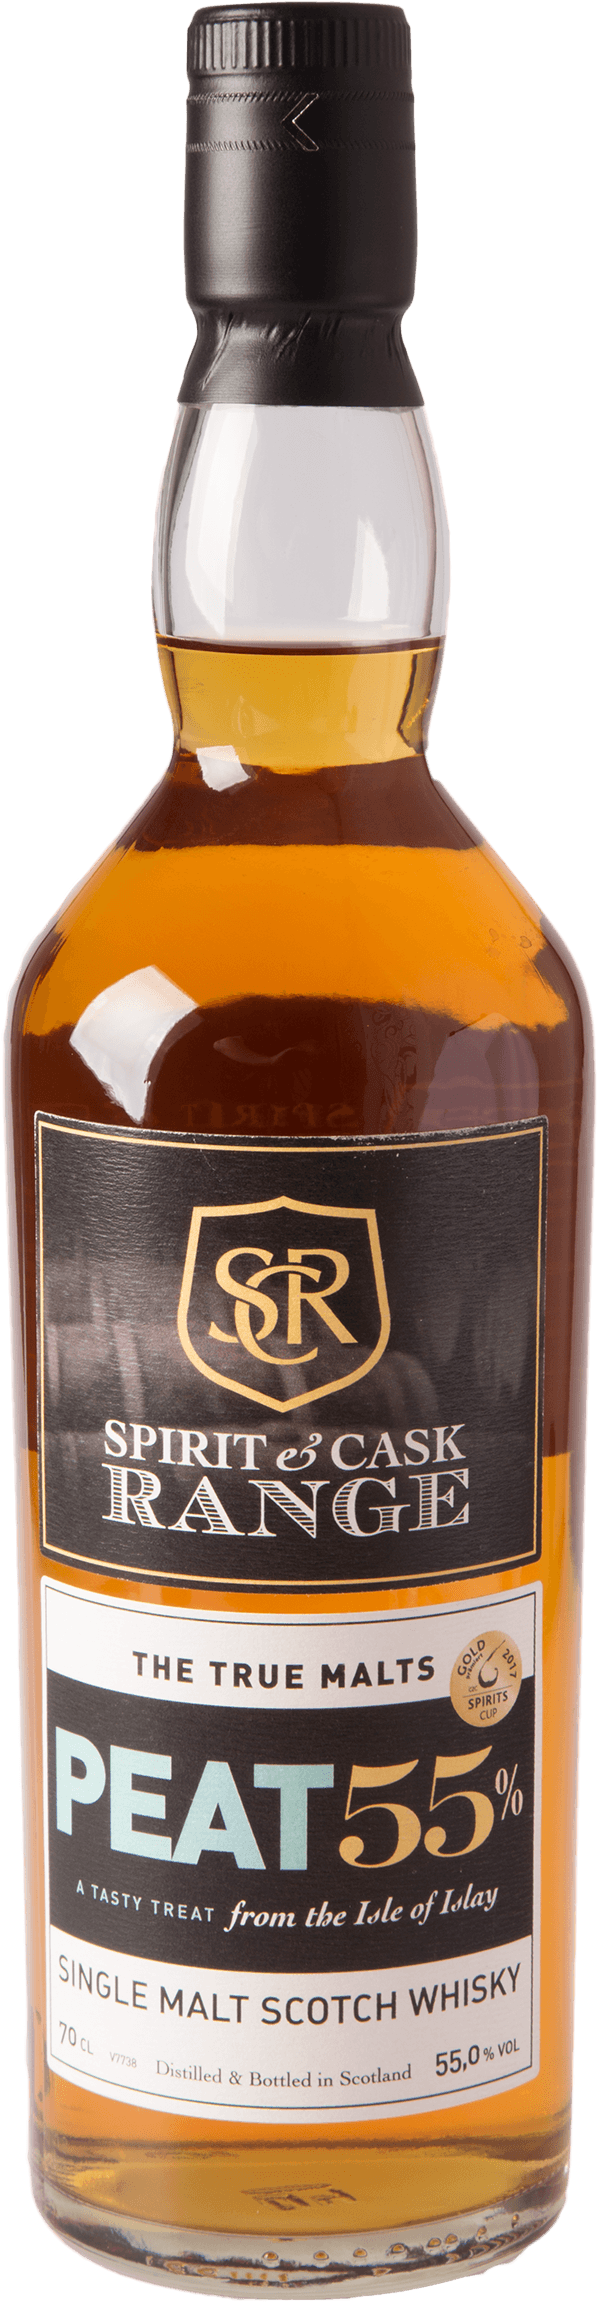 Spirit & Cask Range Peat 55 Islay Single Malt Whisky 55% 0,7L Shop